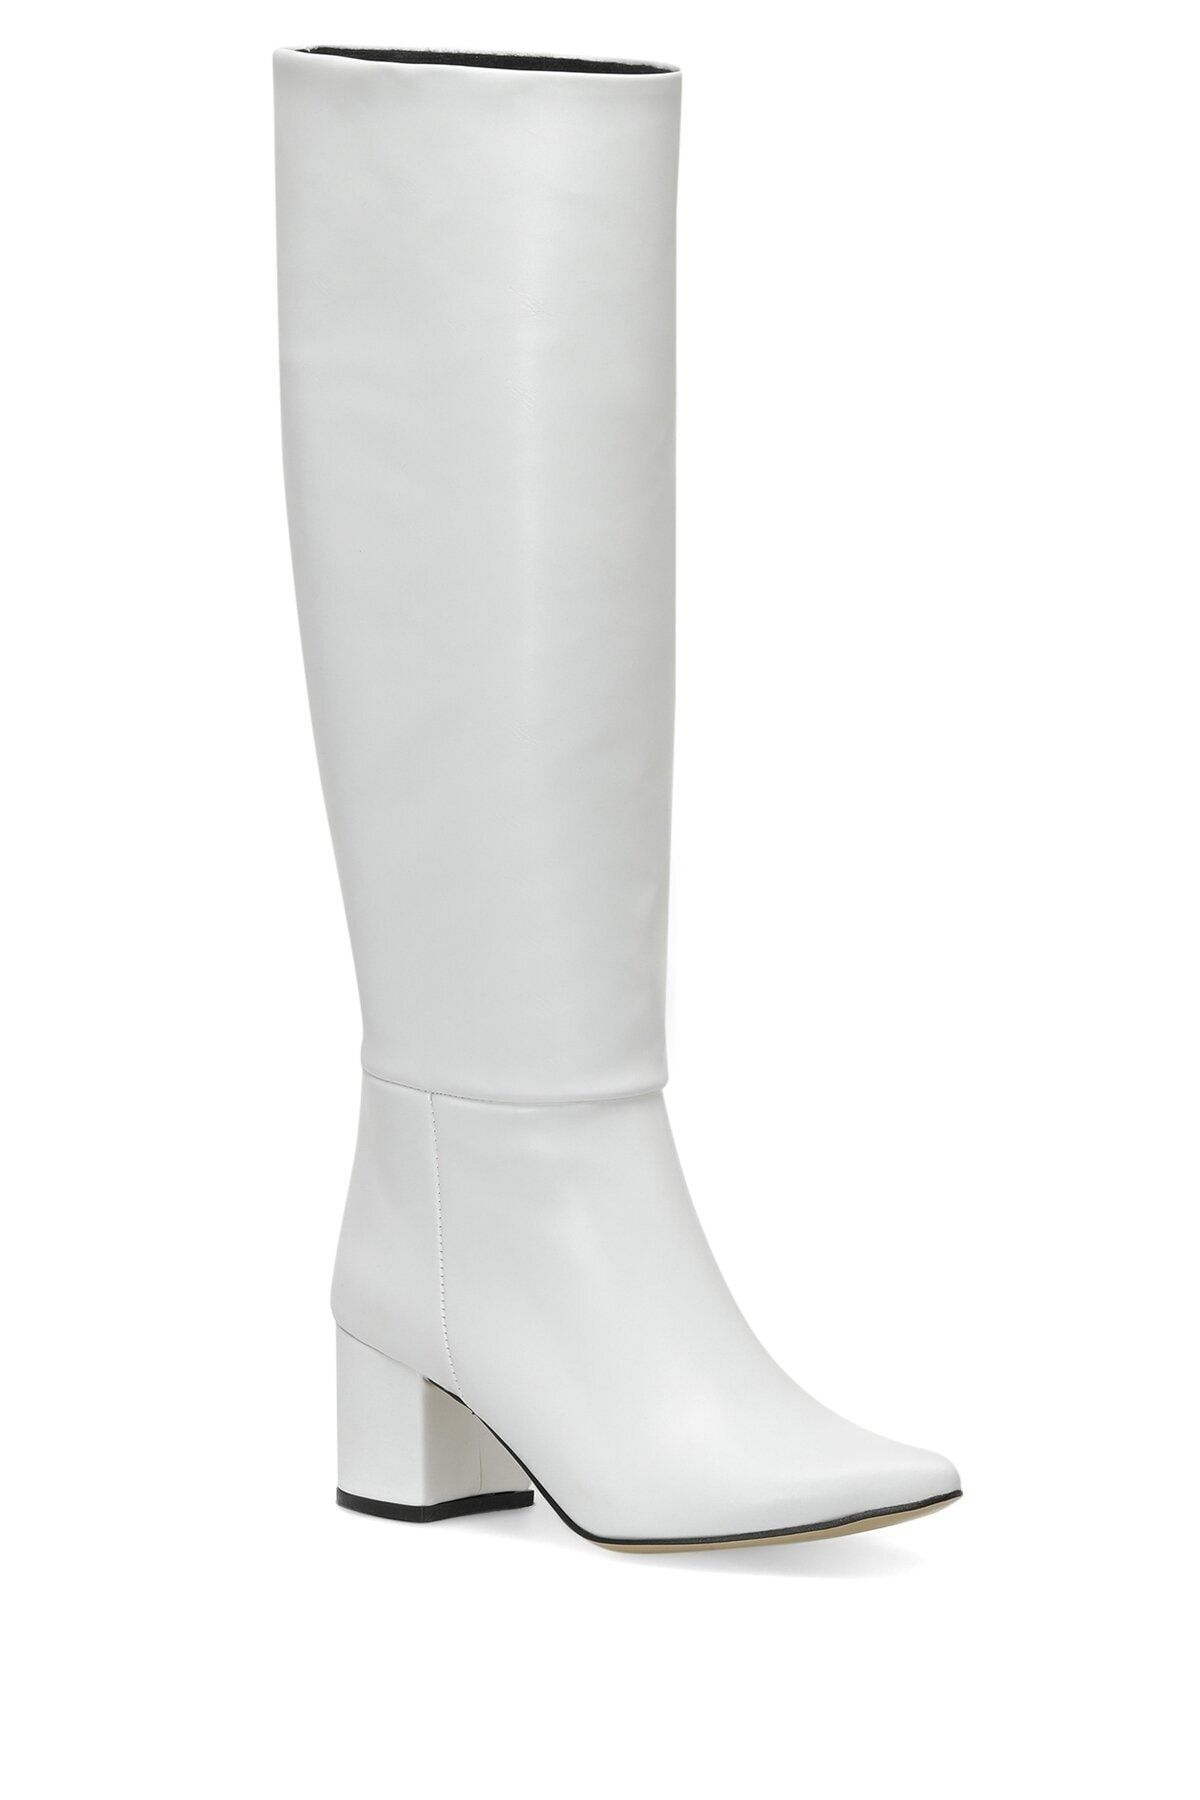 Butigo Senry 2pr Beyaz Kadın Topuklu Çizme